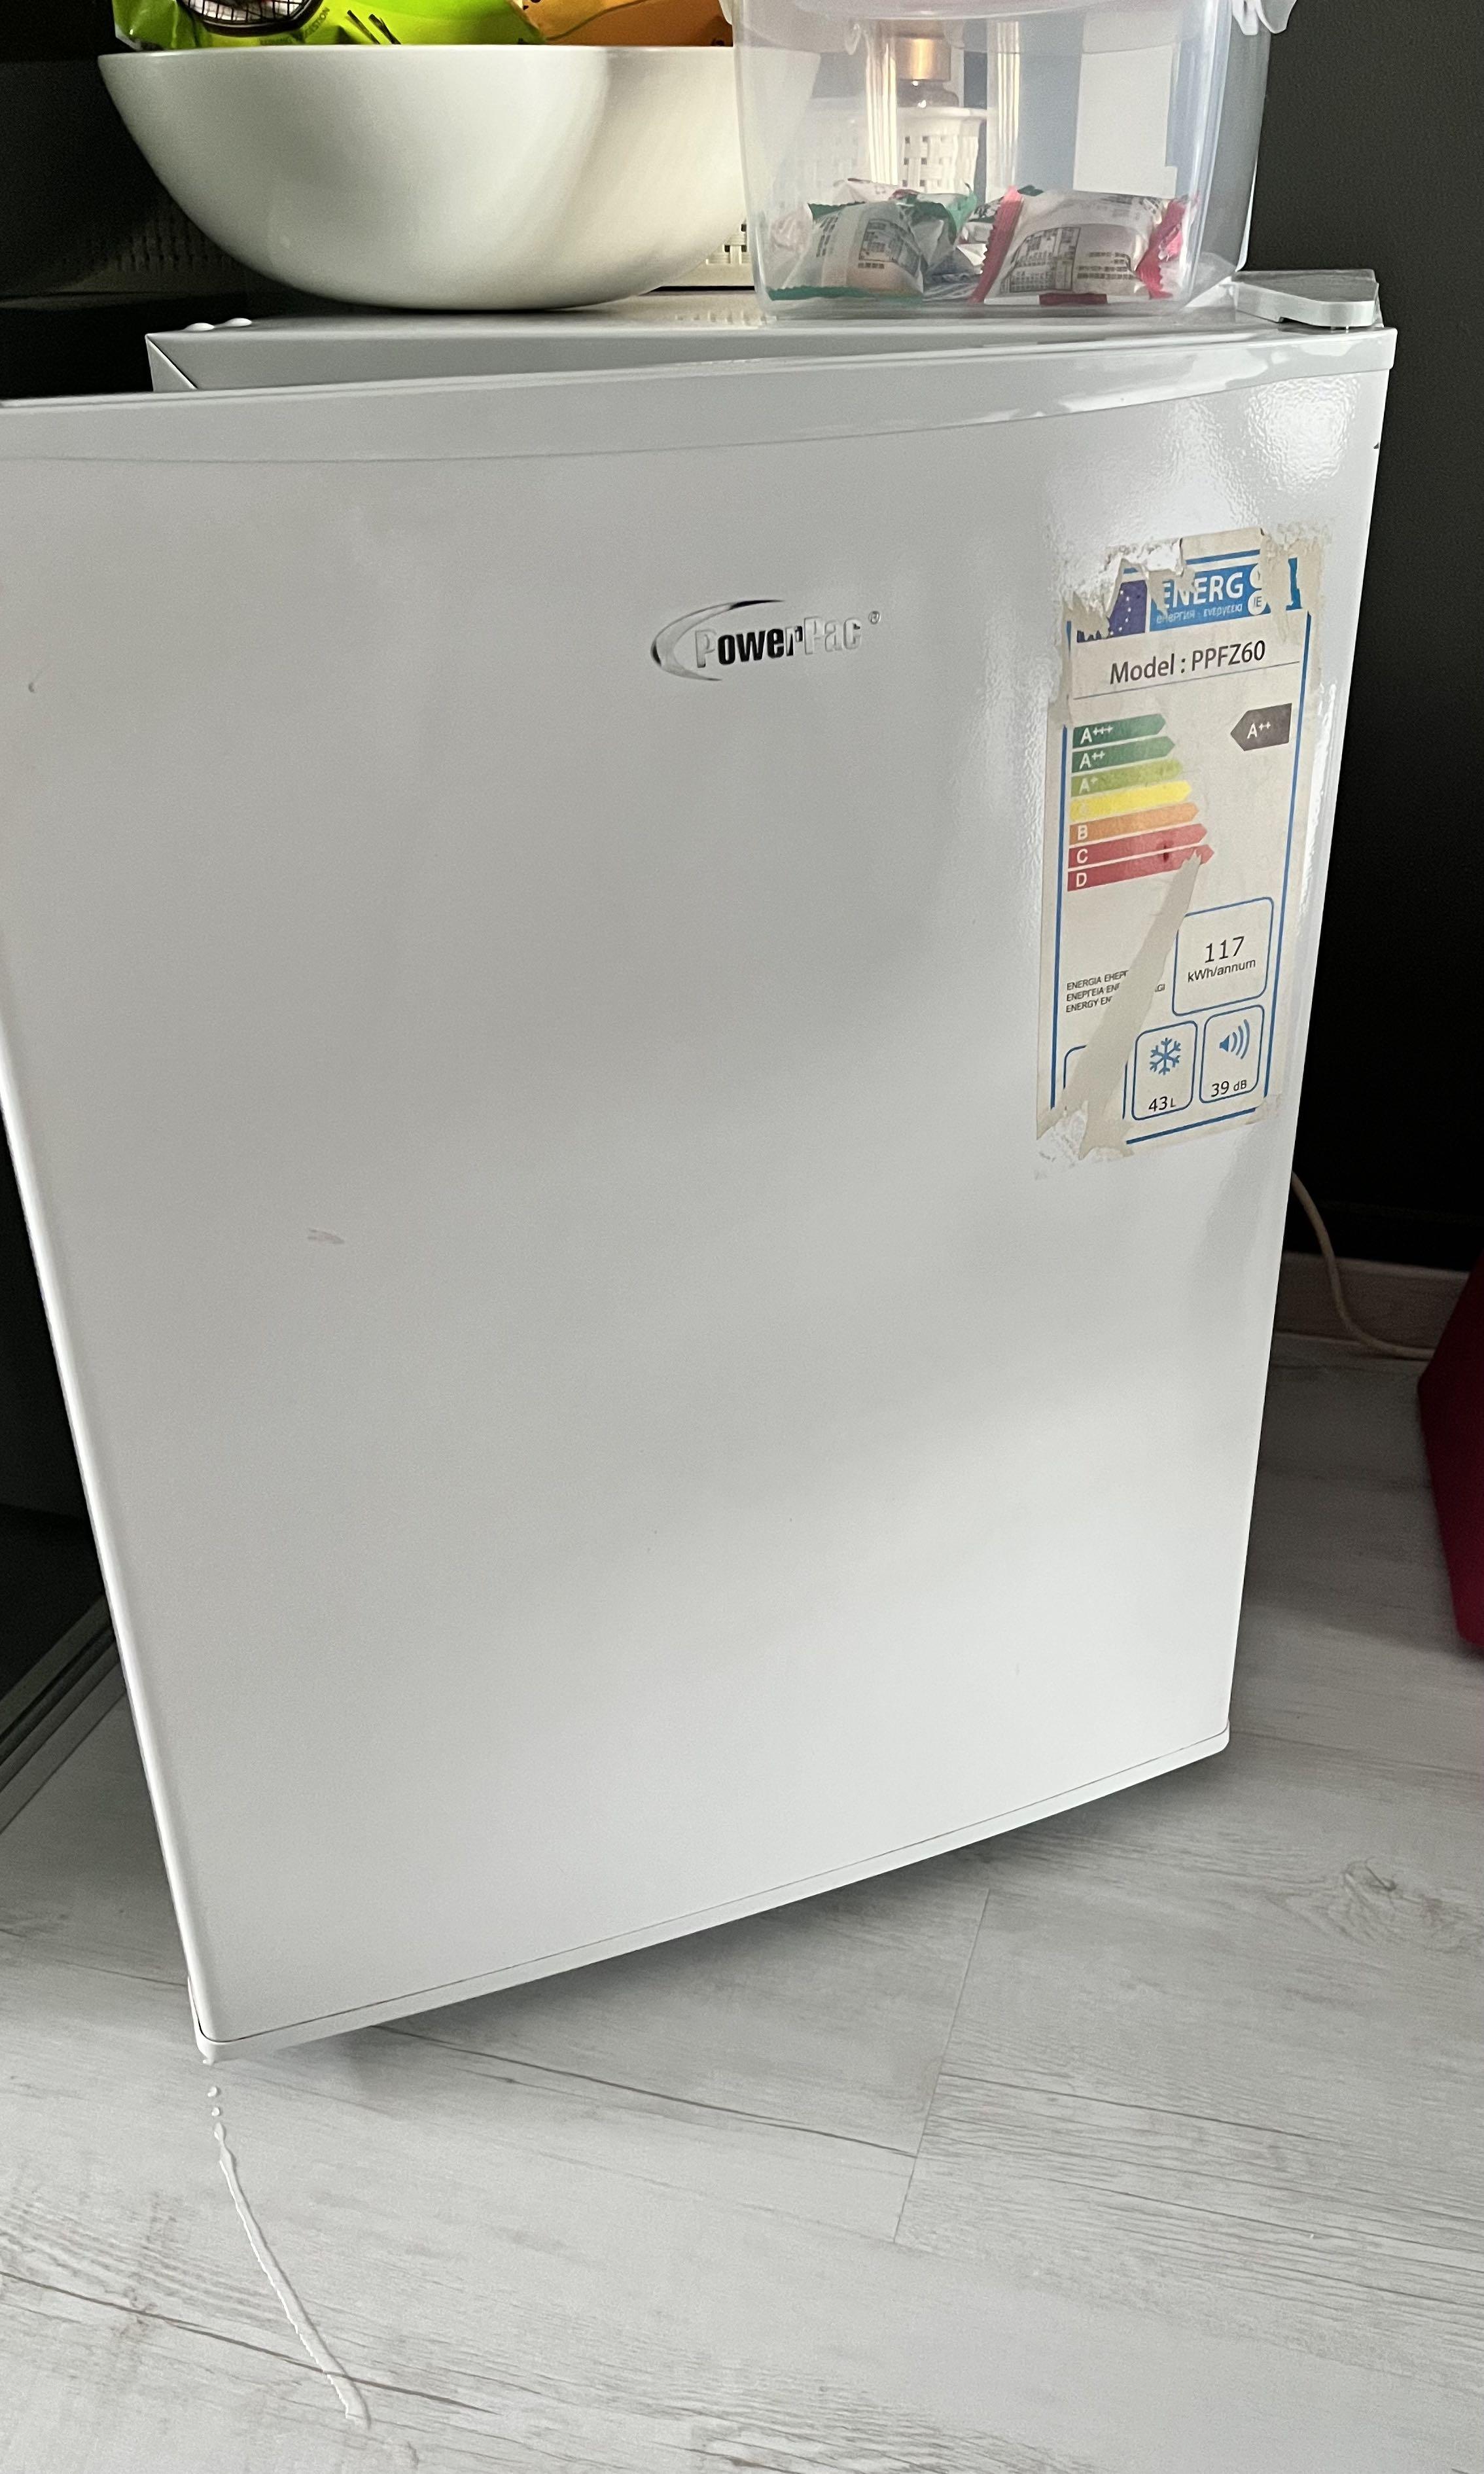 Mini Freezer 60L, TV & Home Appliances, Kitchen Appliances